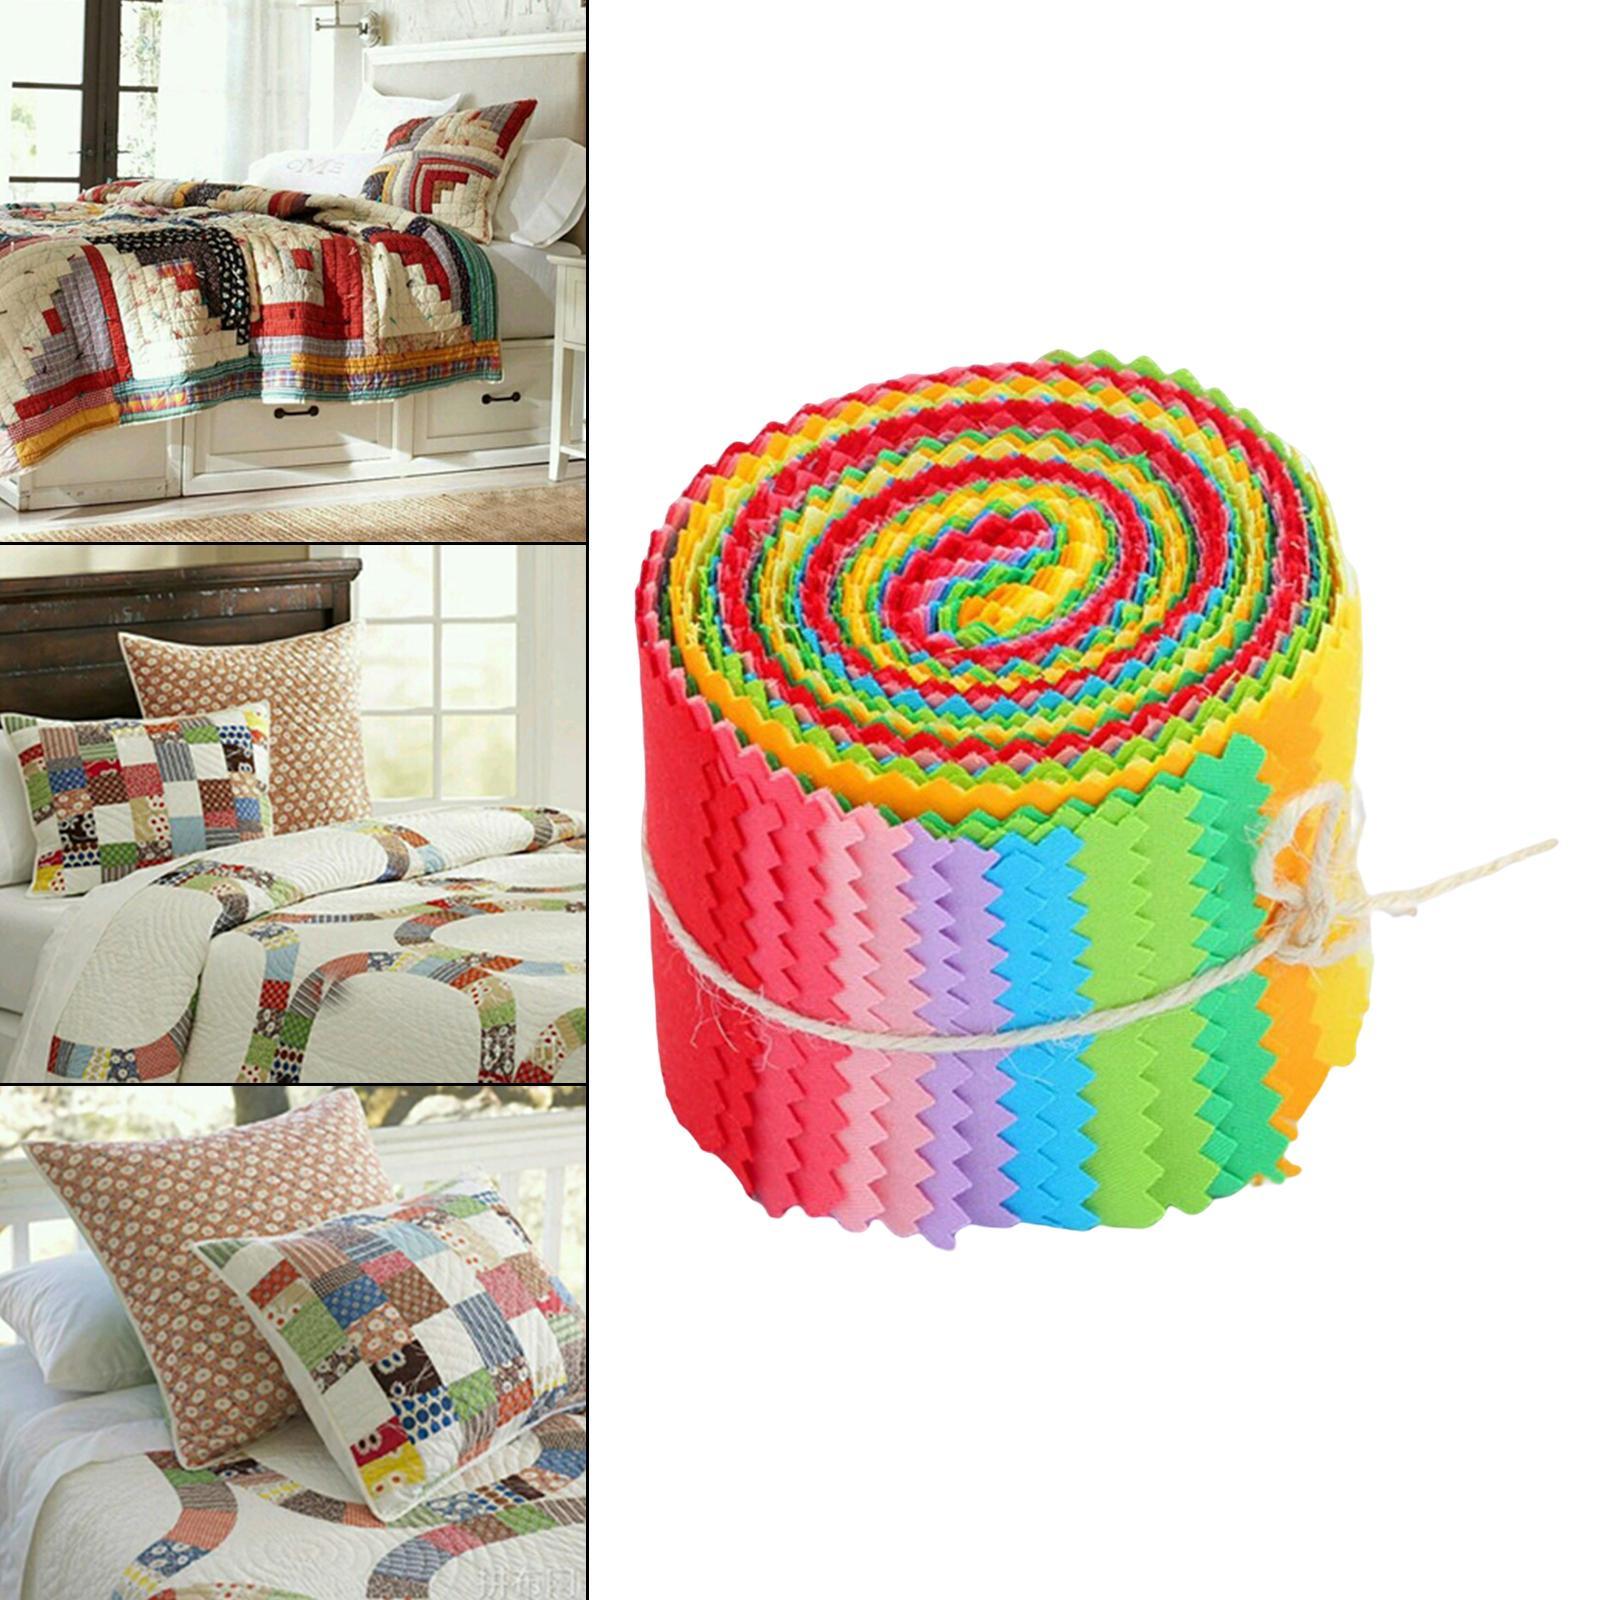 Colorful Roll Up Cotton Fabric Strips Bundles 20Pcs